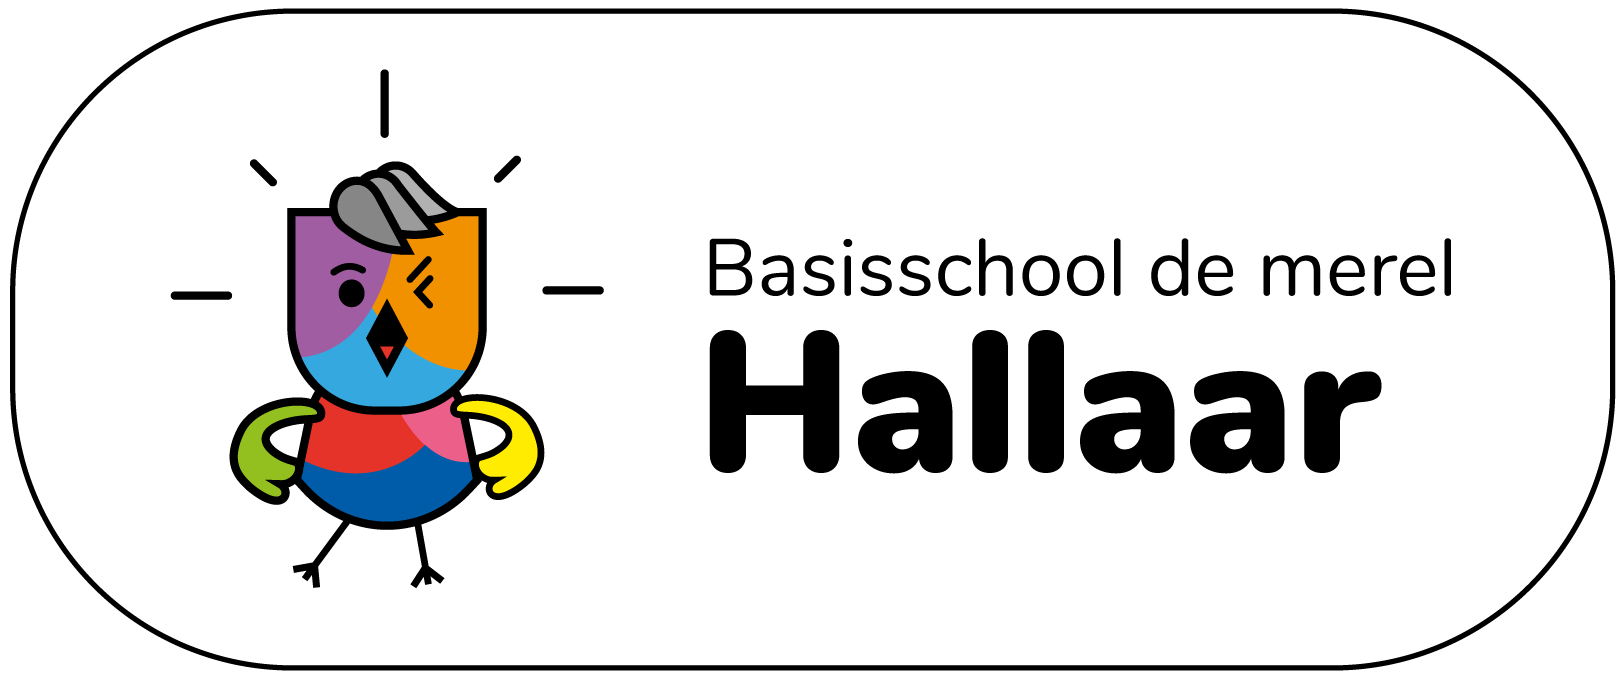 4525 Logo Hallaar Rgb 1